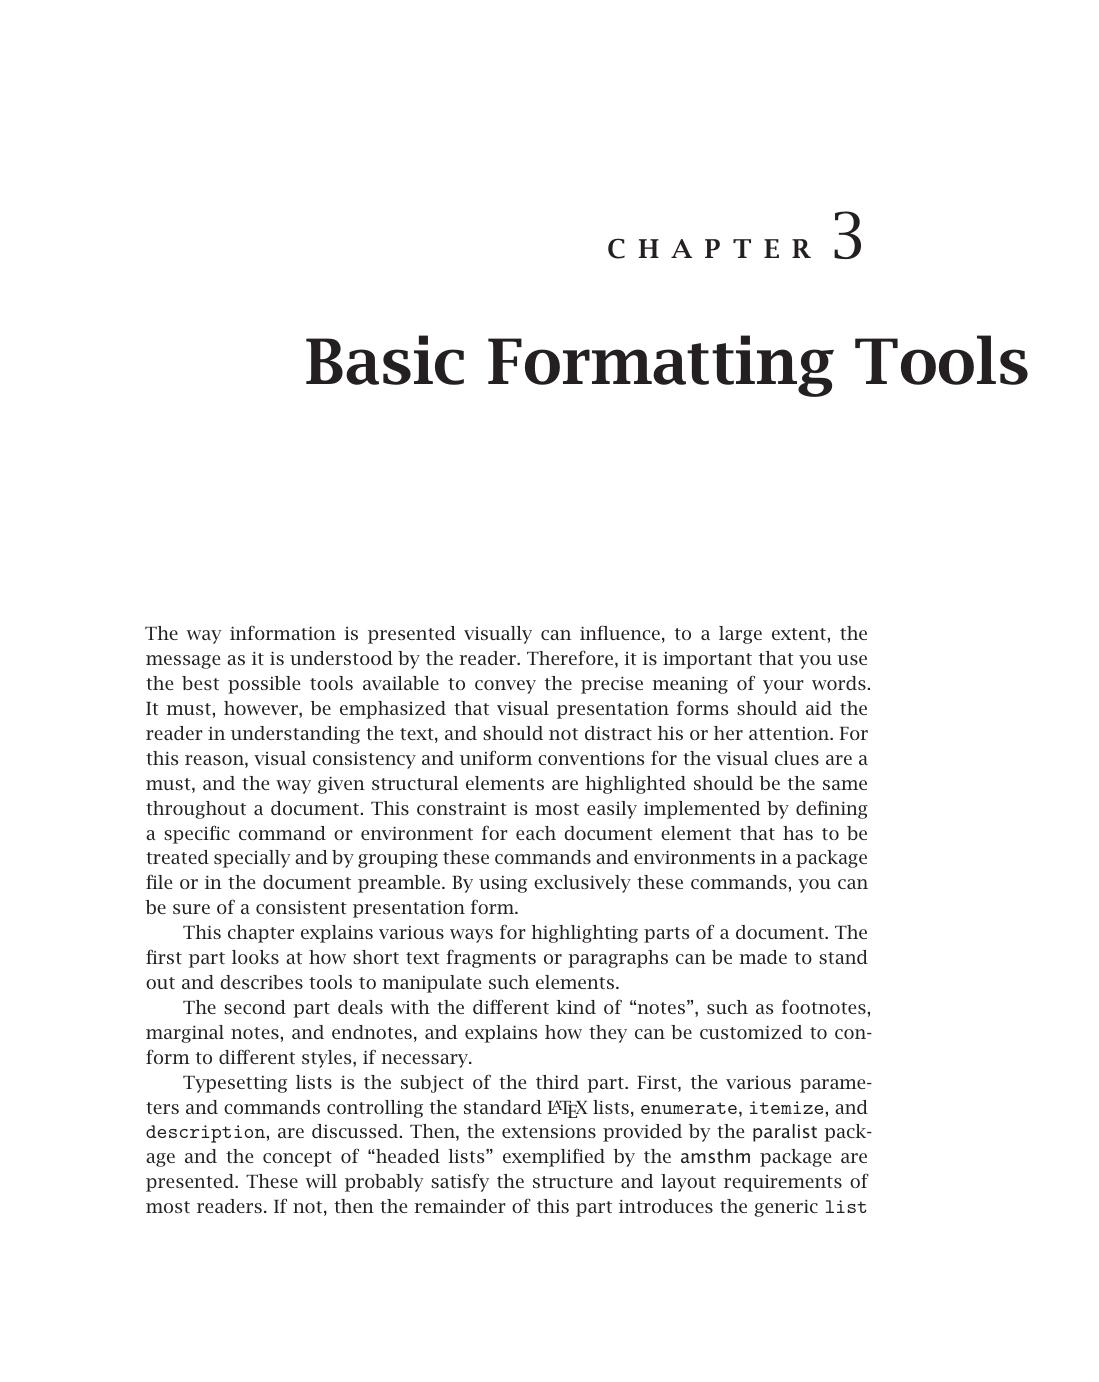 LaTeX - Basic Formatting Tools - Chapter 3